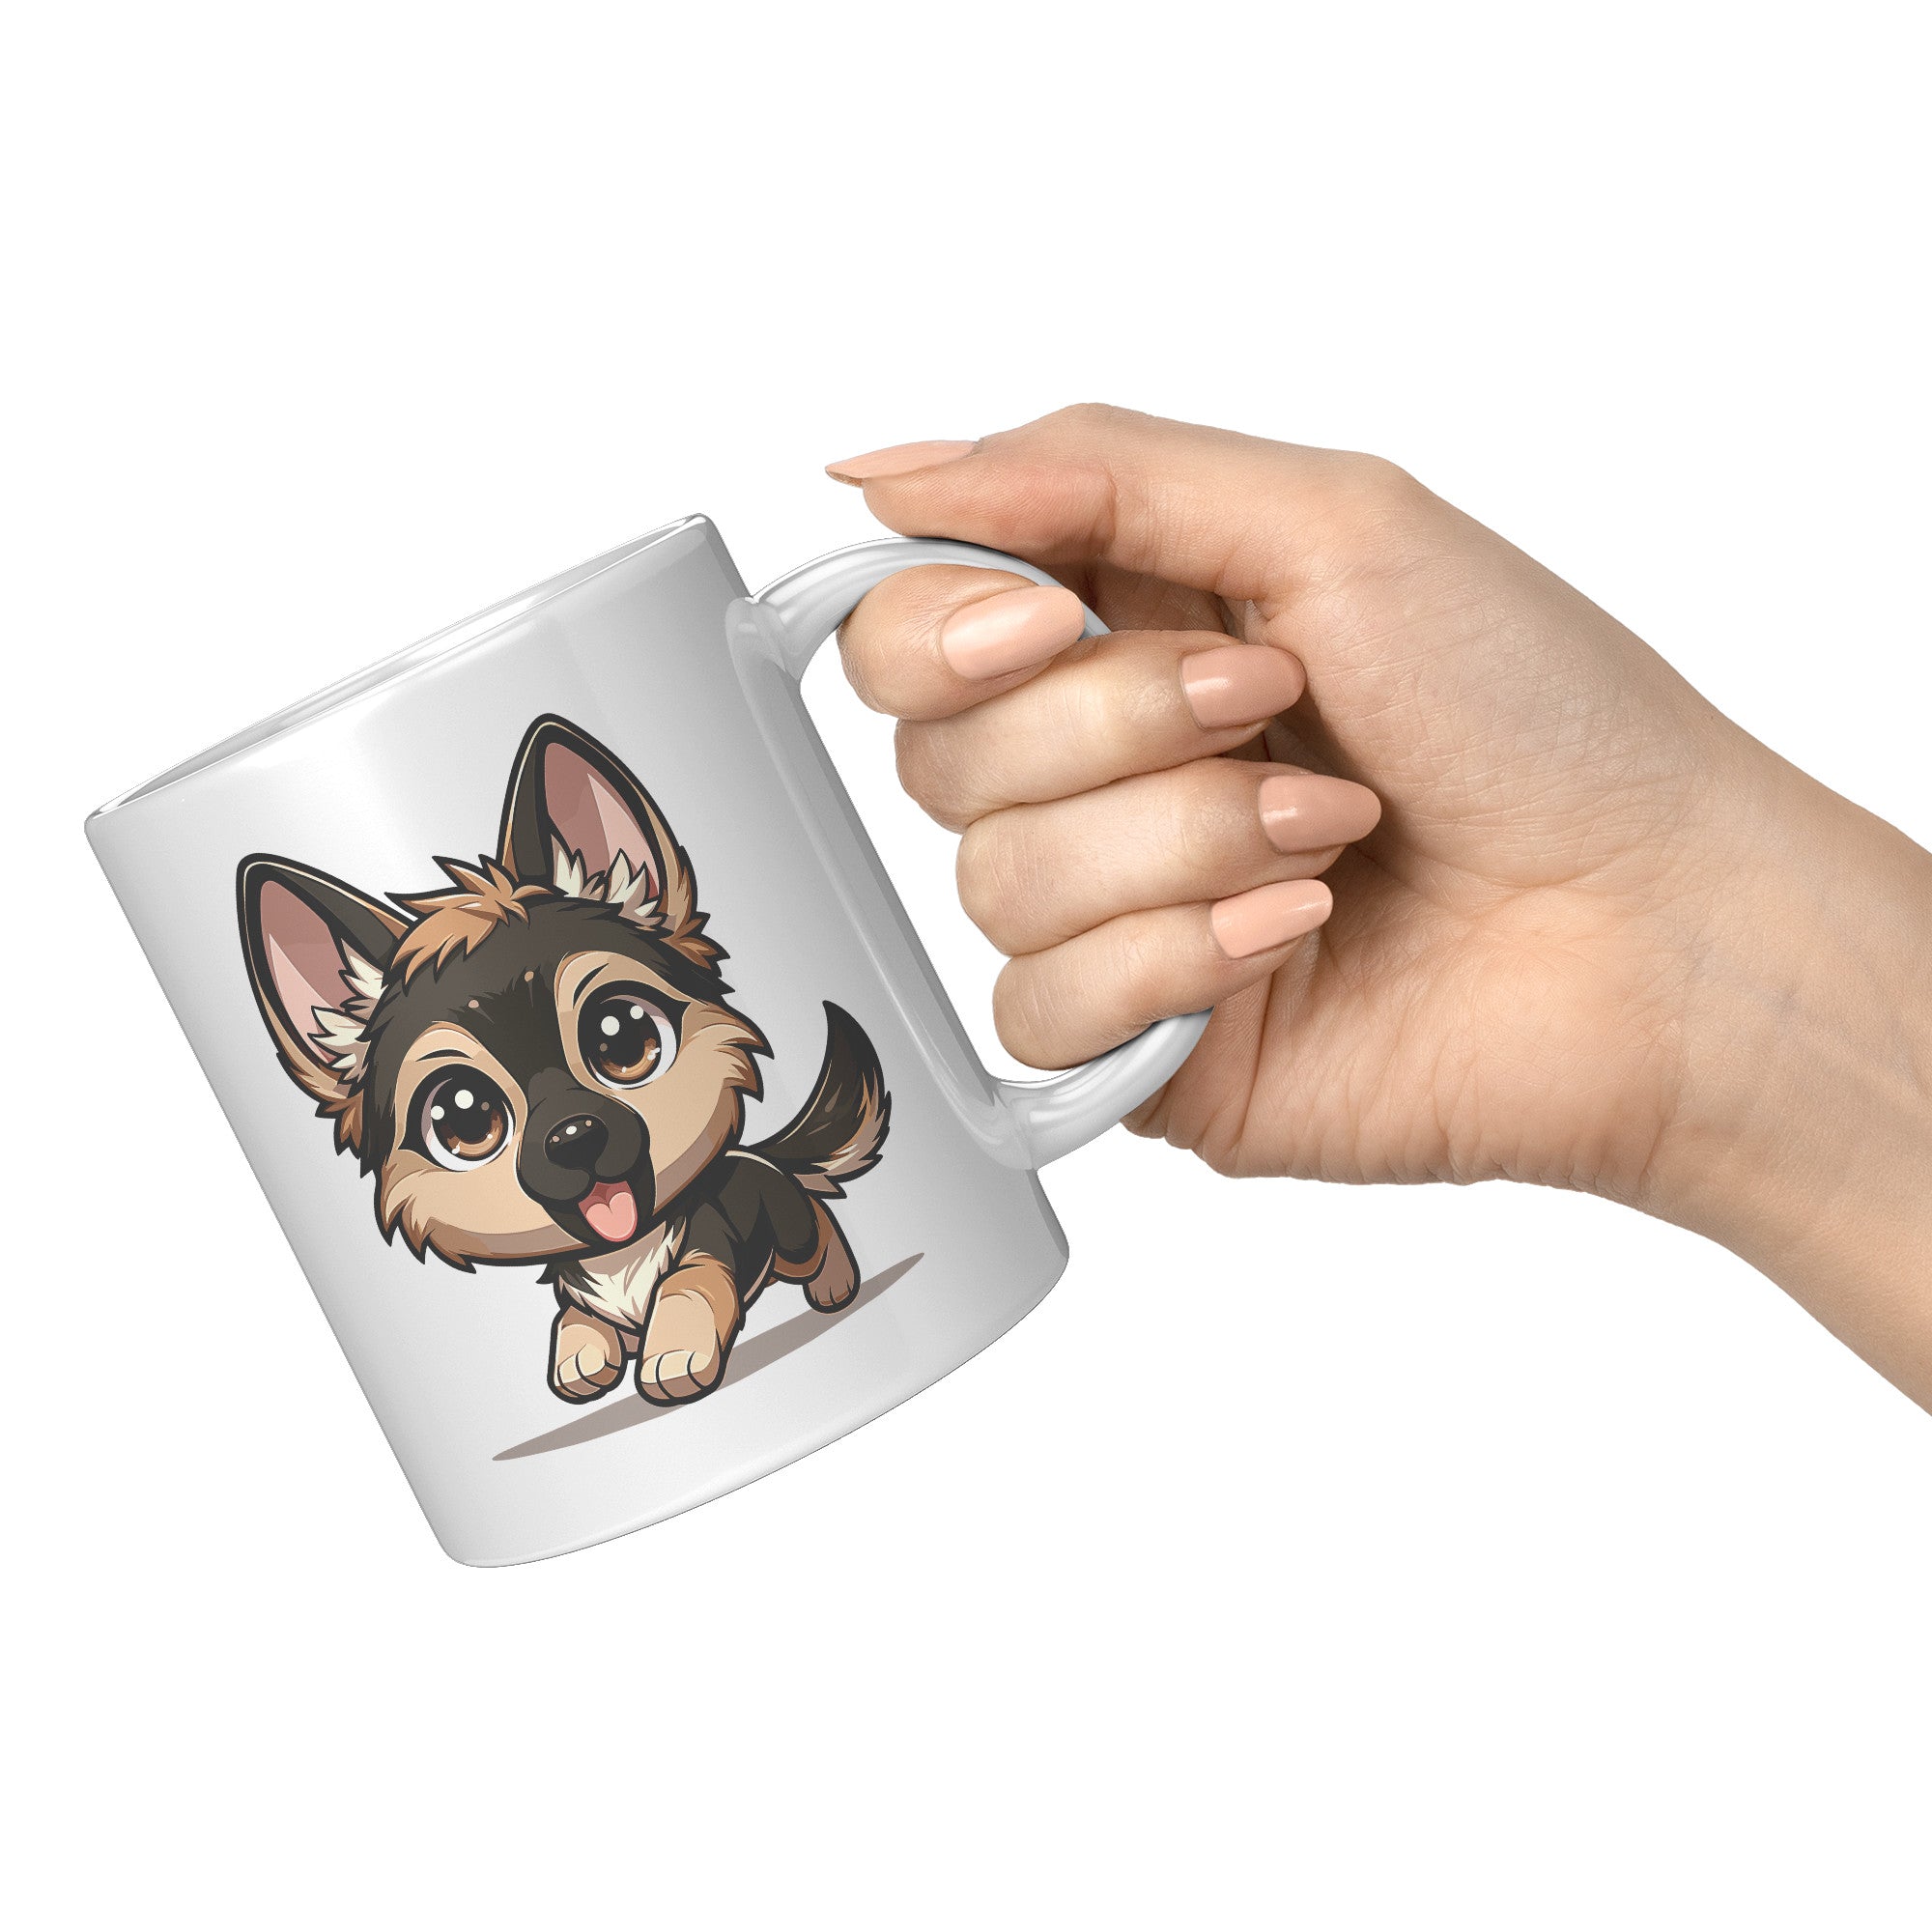 11oz German Shepherd Cartoon Coffee Mug - Loyal GSD Lover Coffee Mug - Perfect Gift for German Shepherd Owners - Protective Dog Breed Coffee Mug - B